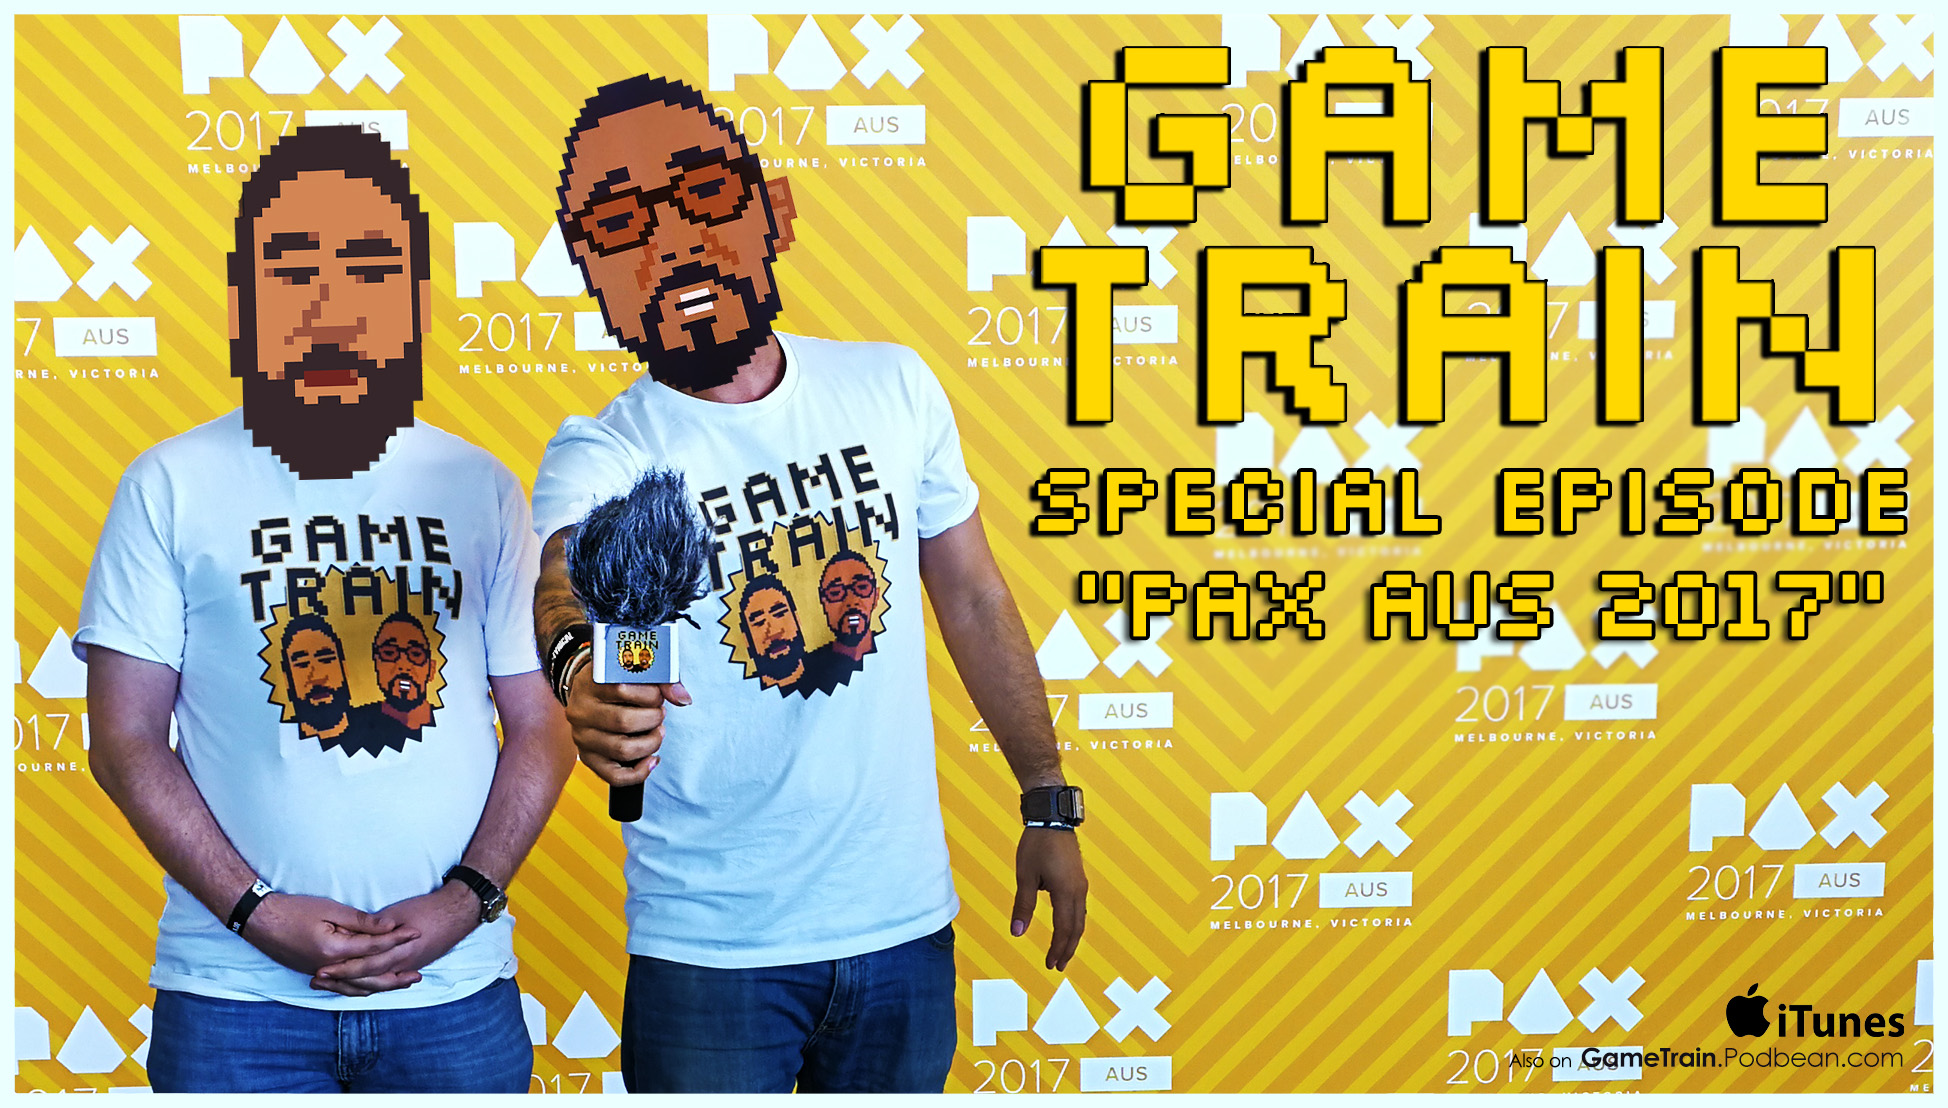 Game Train - Pax Aus 2017 Special